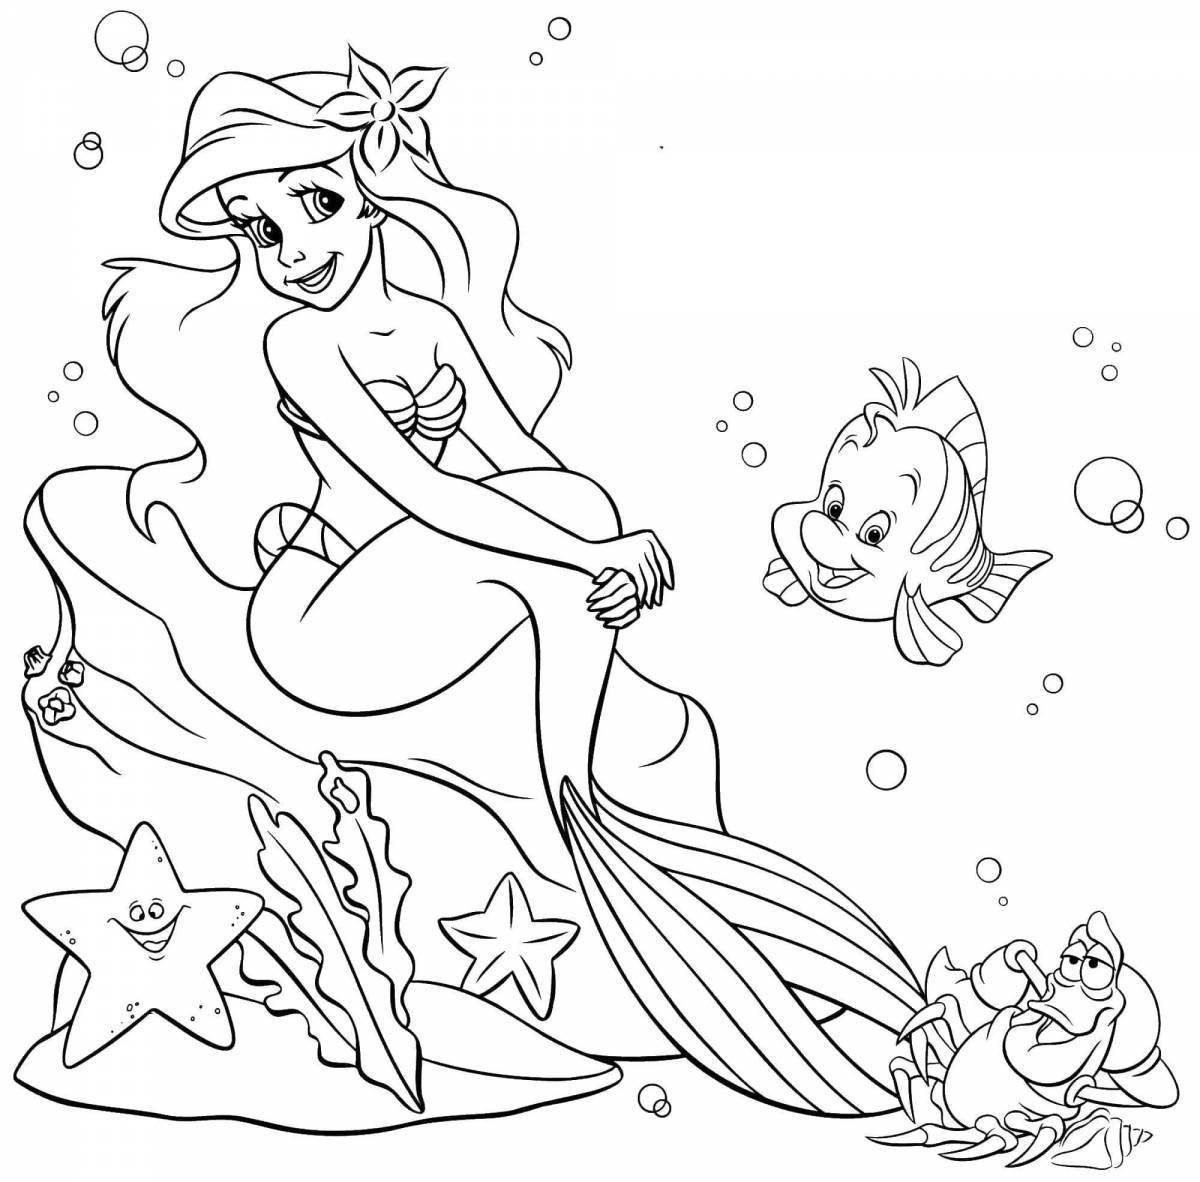 Elegant coloring drawing of a mermaid